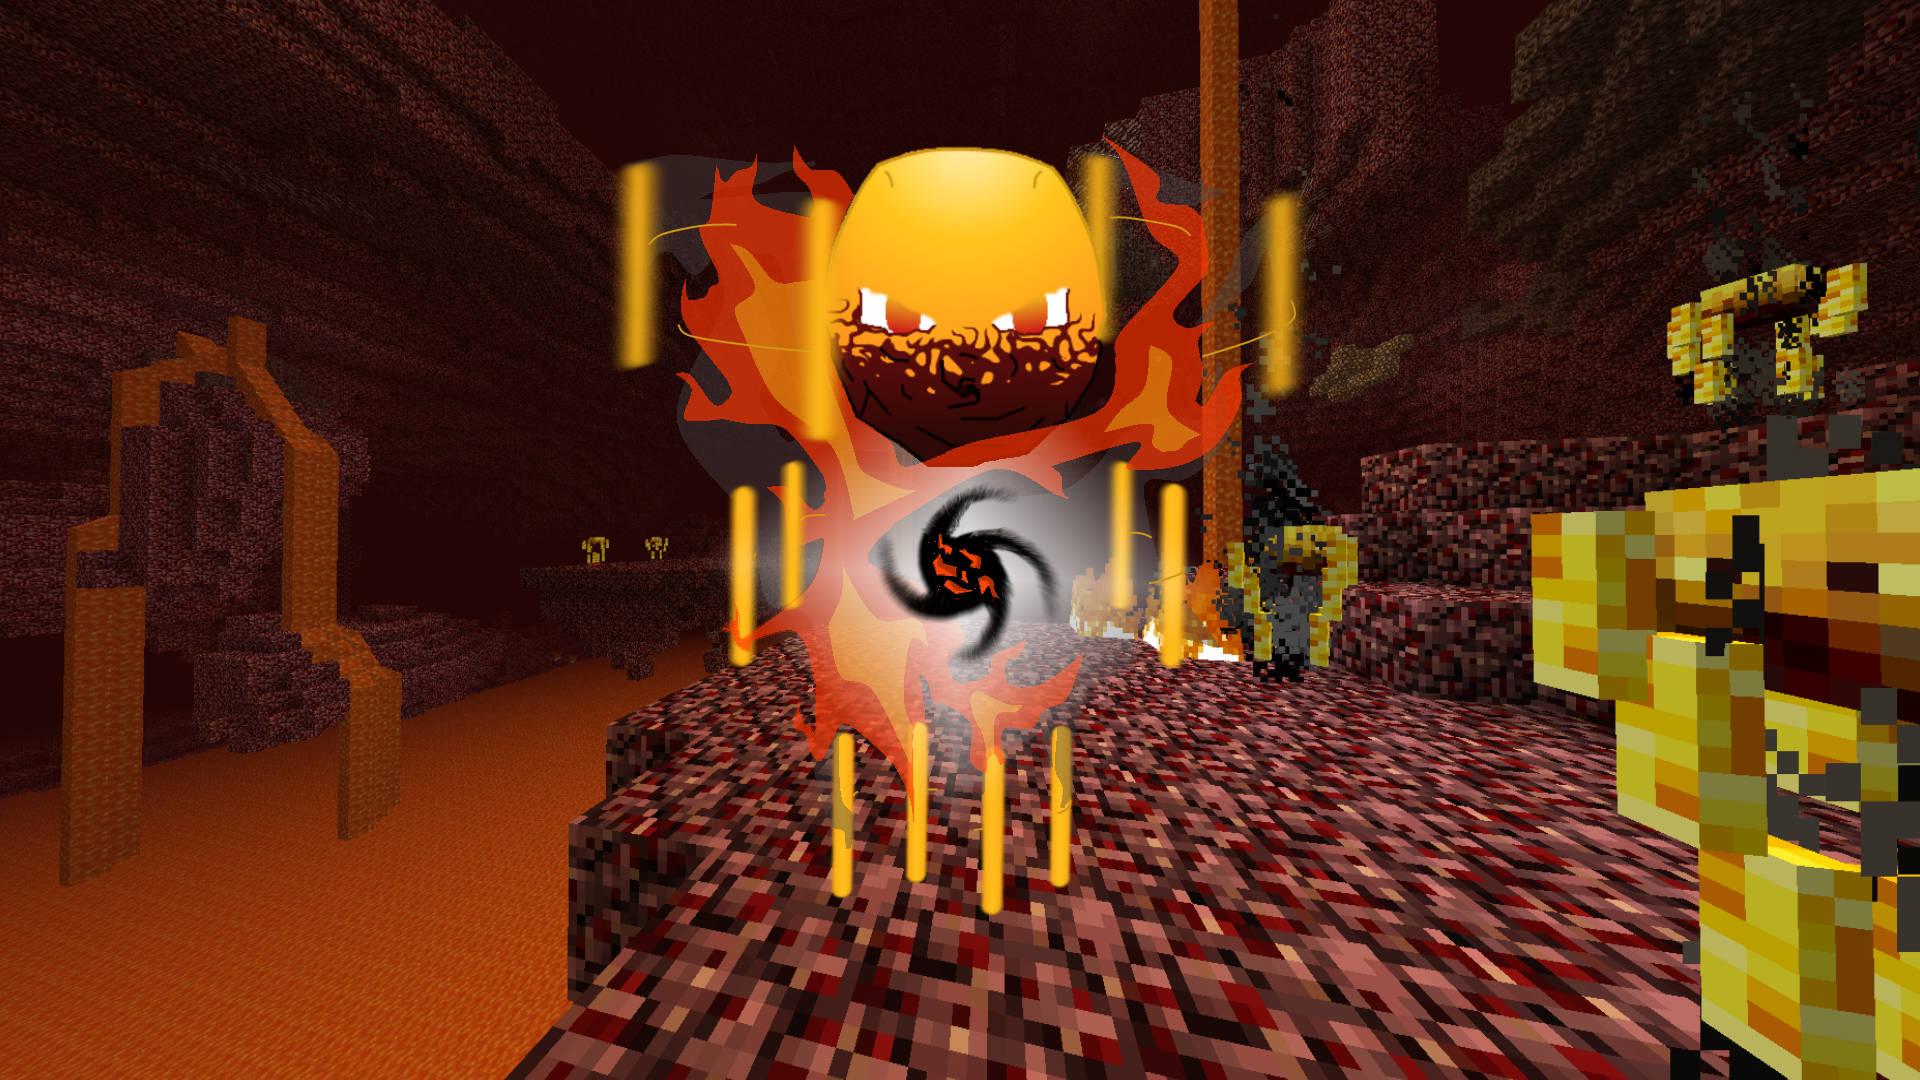 ArtStation - Minecraft's Blaze in creepy way